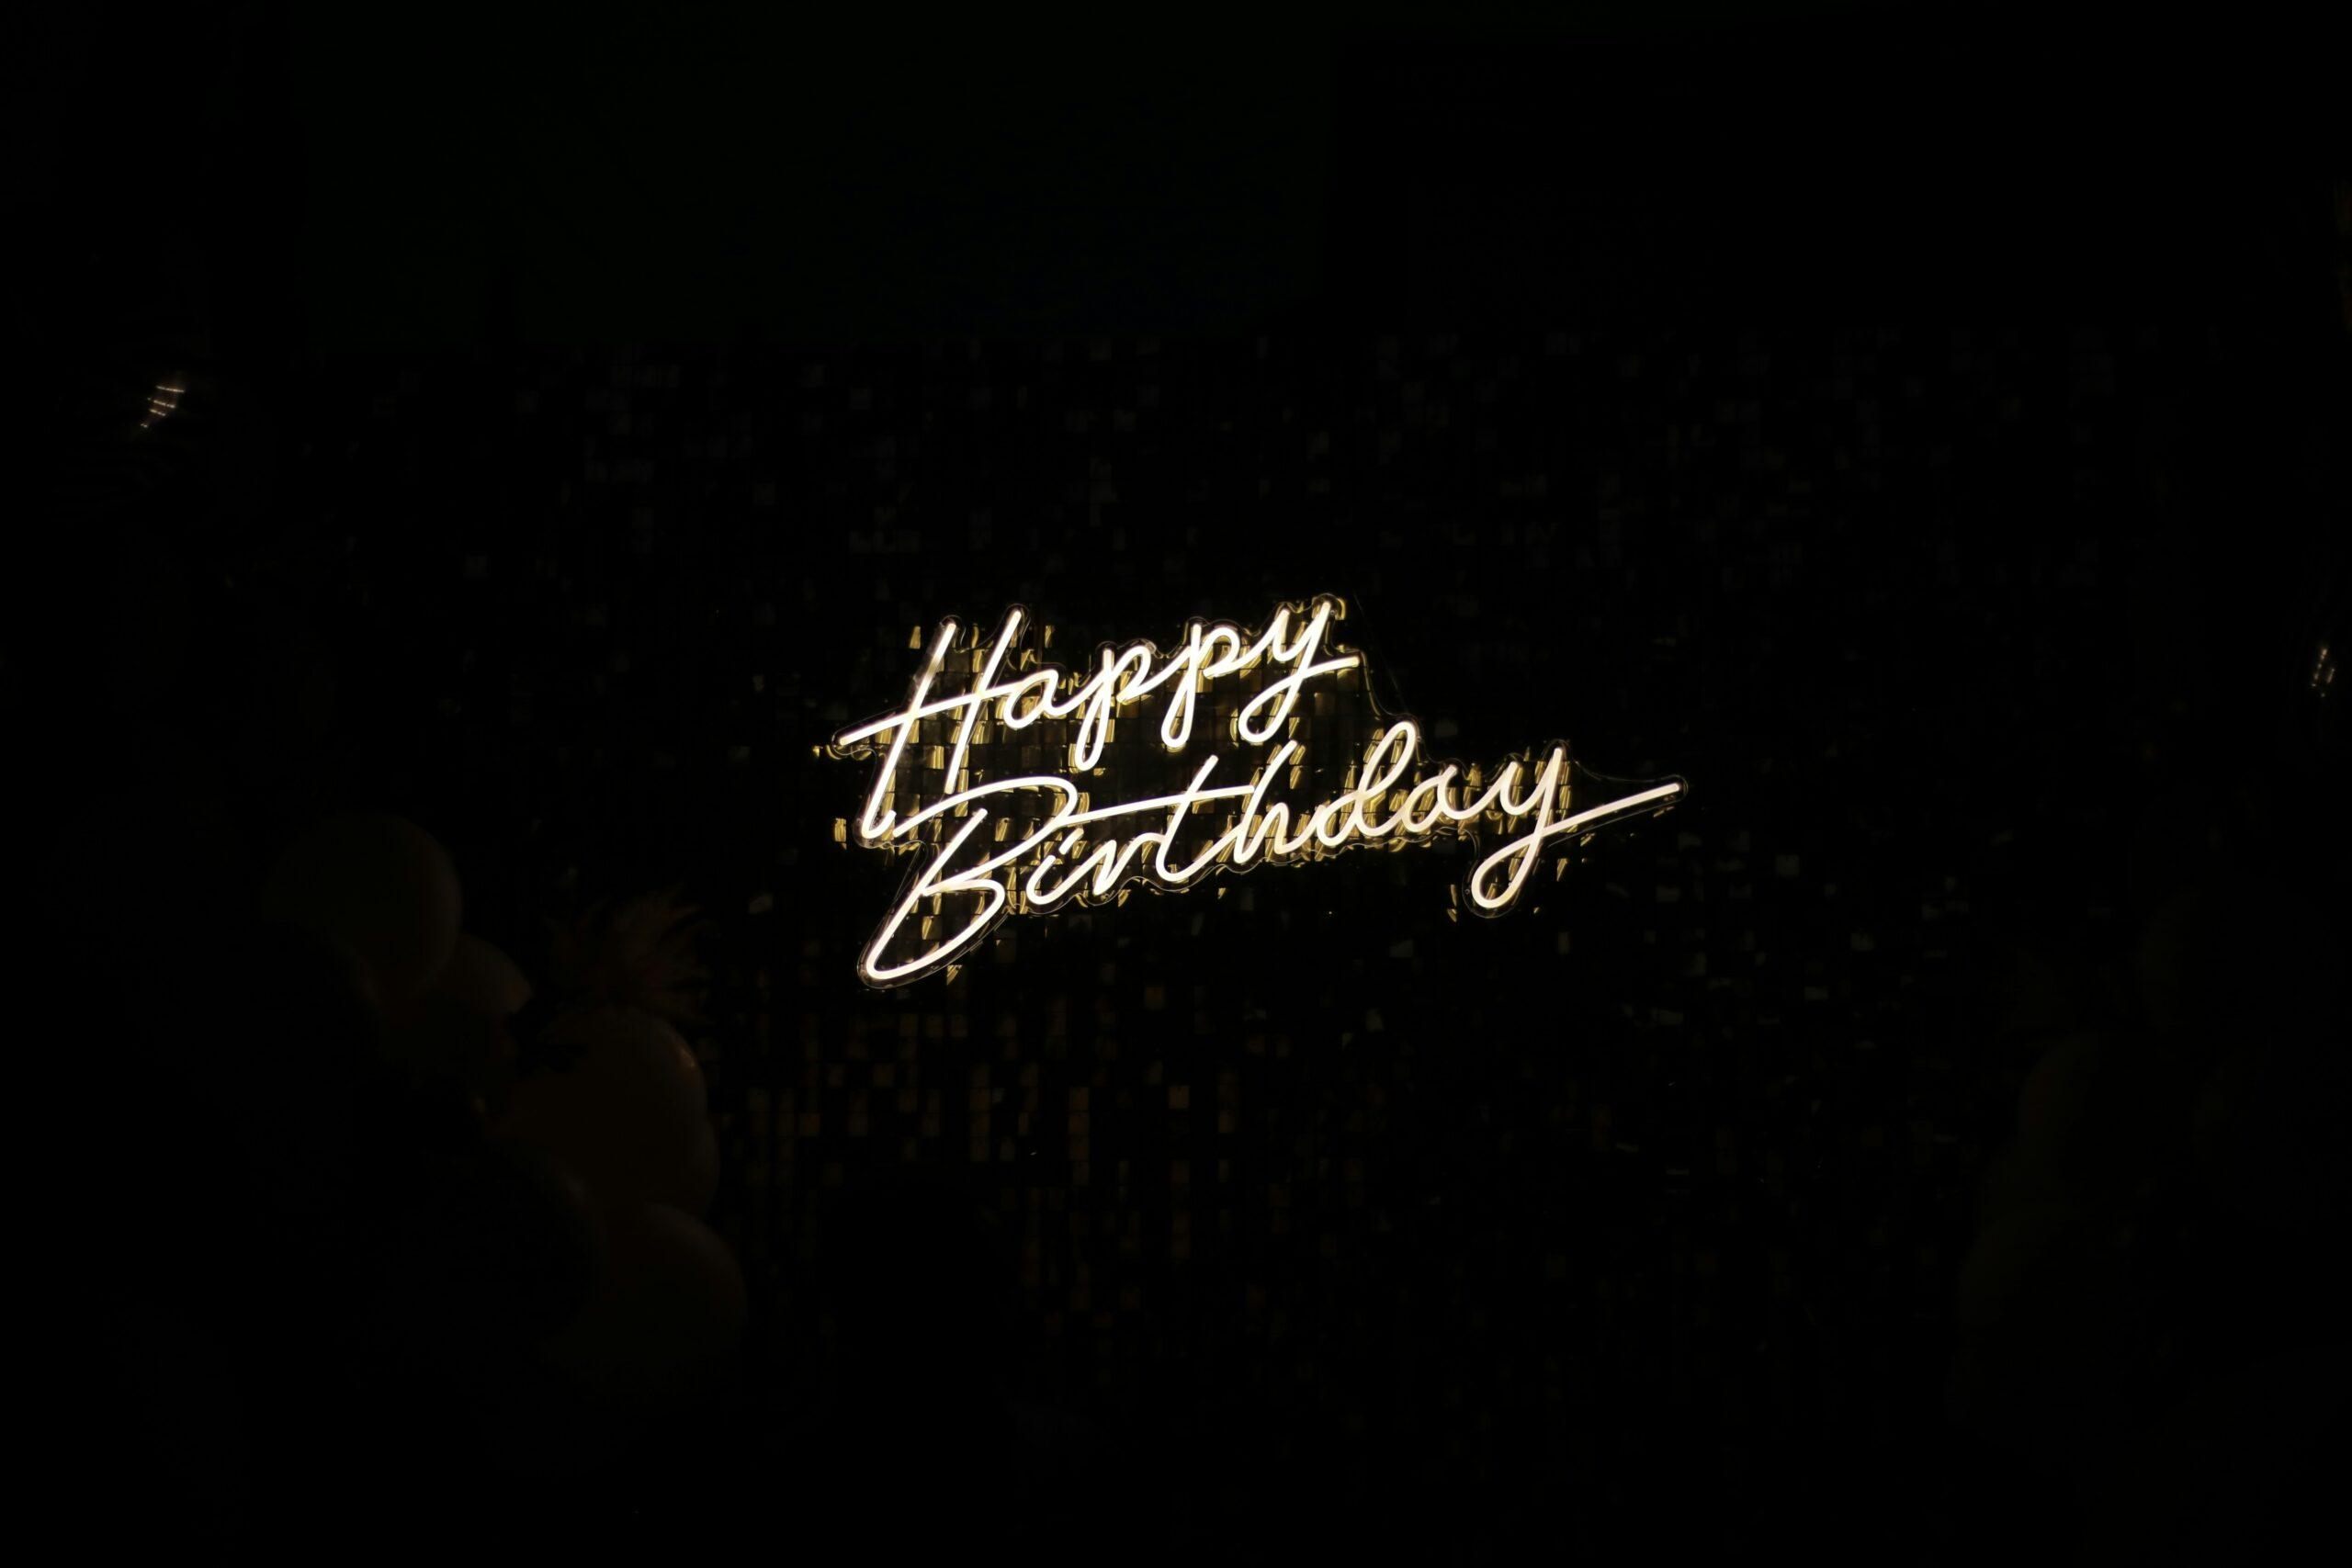 A "happy birthday" sign